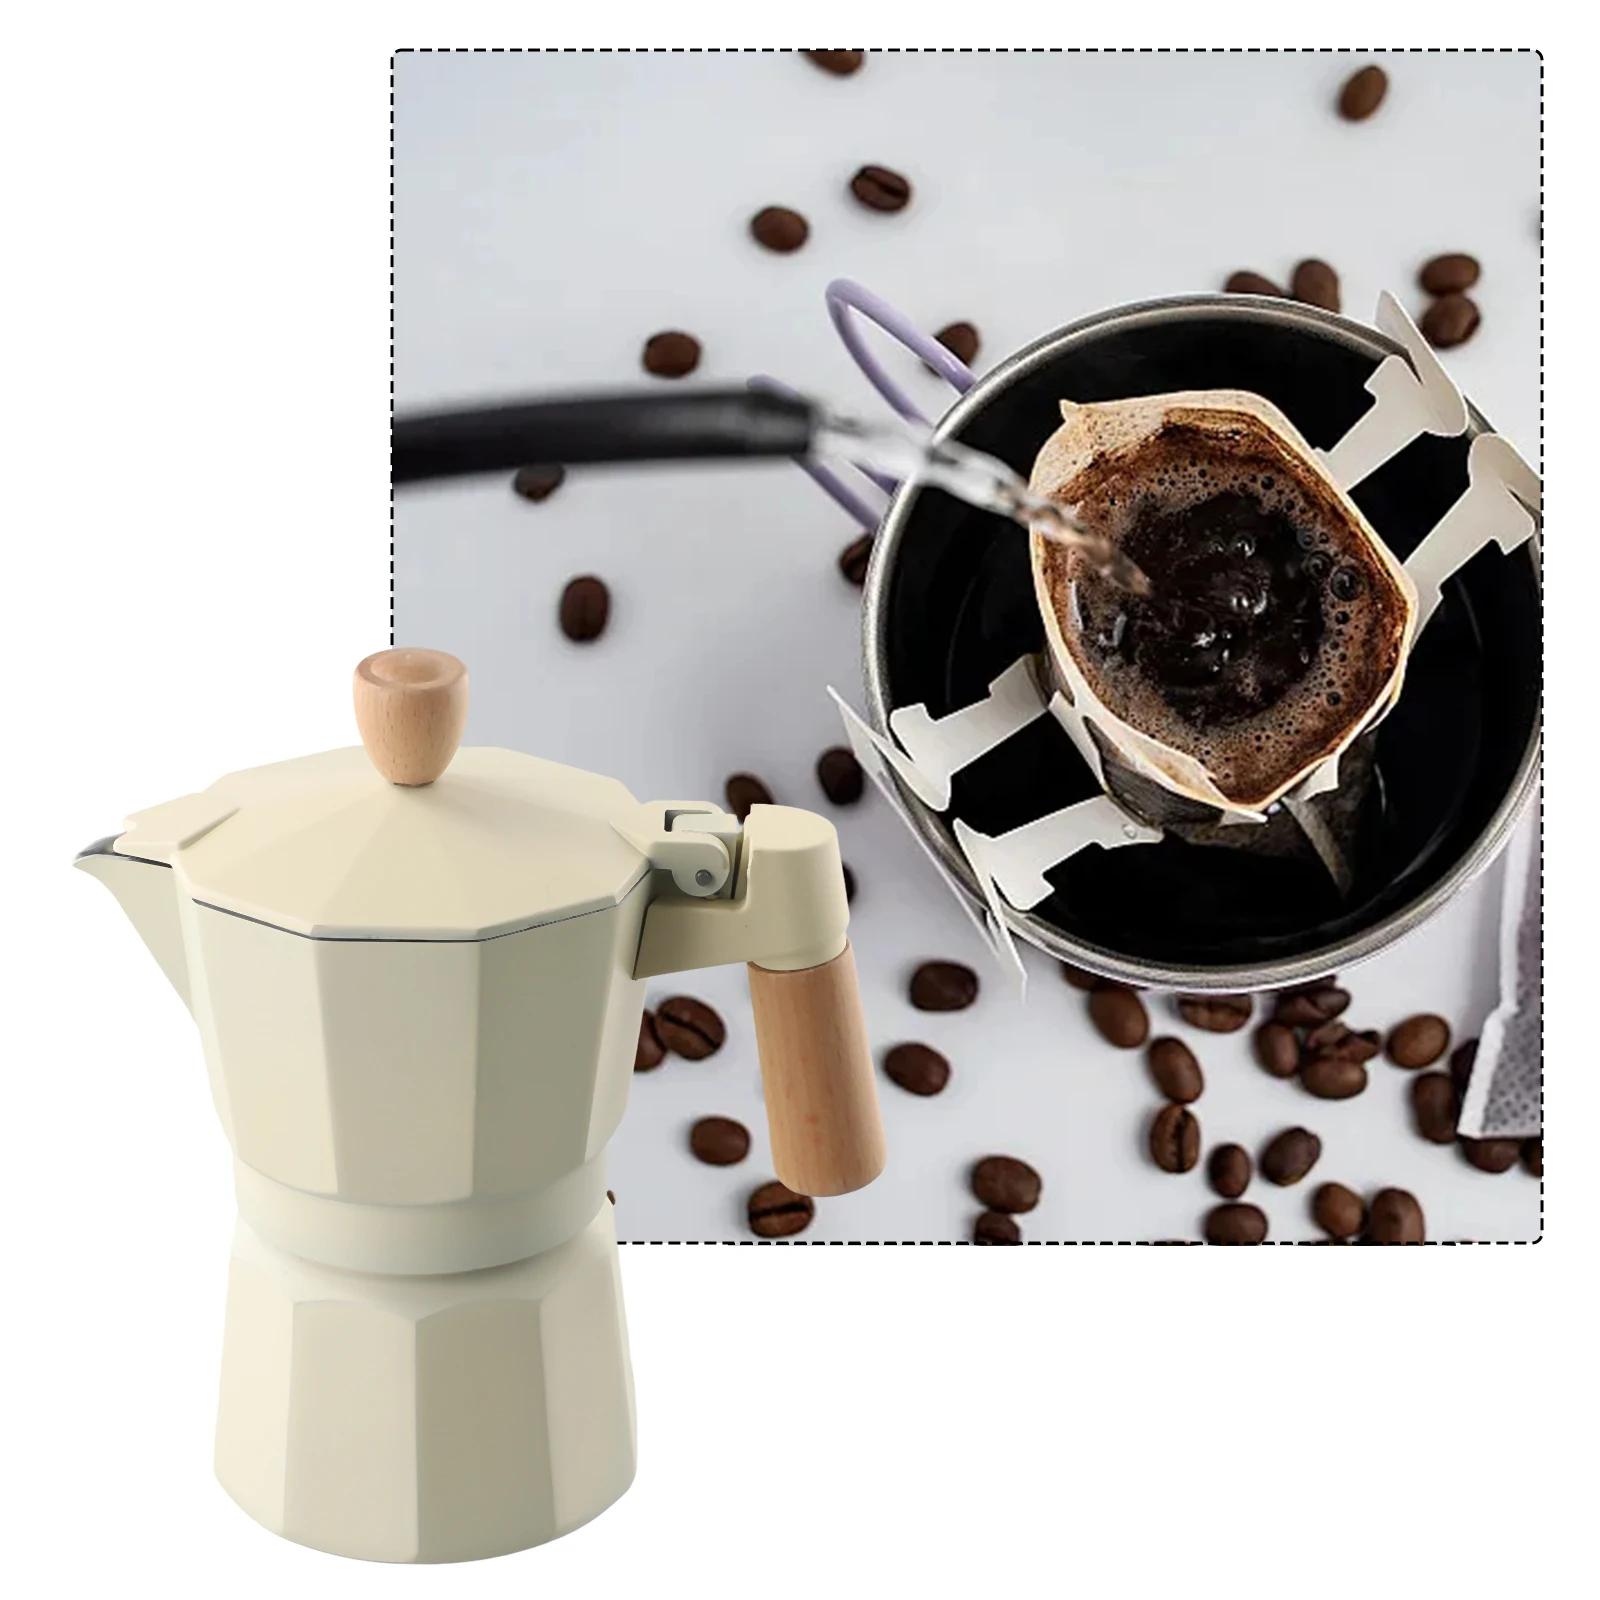 https://ae01.alicdn.com/kf/S52d9a5d989ab4756aa285a6ae061c78ay/3-6-Cups-Coffee-Maker-Aluminum-Mocha-Espresso-Percolator-Pot-Coffee-Maker-Moka-Pot-Stovetop-Coffee.jpeg